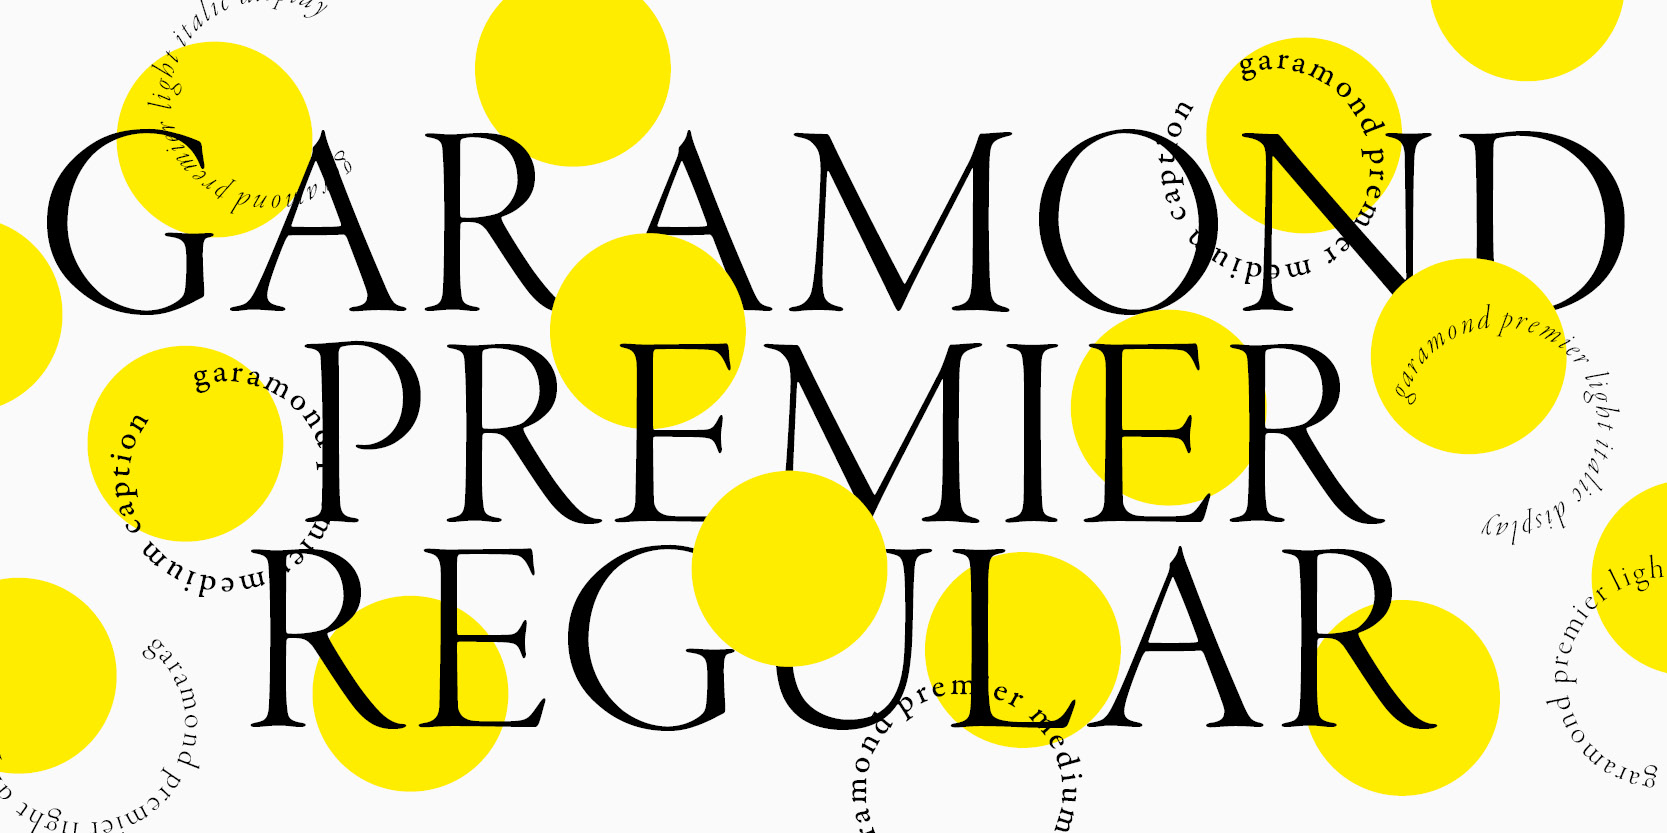 Card displaying Garamond Premier typeface in various styles